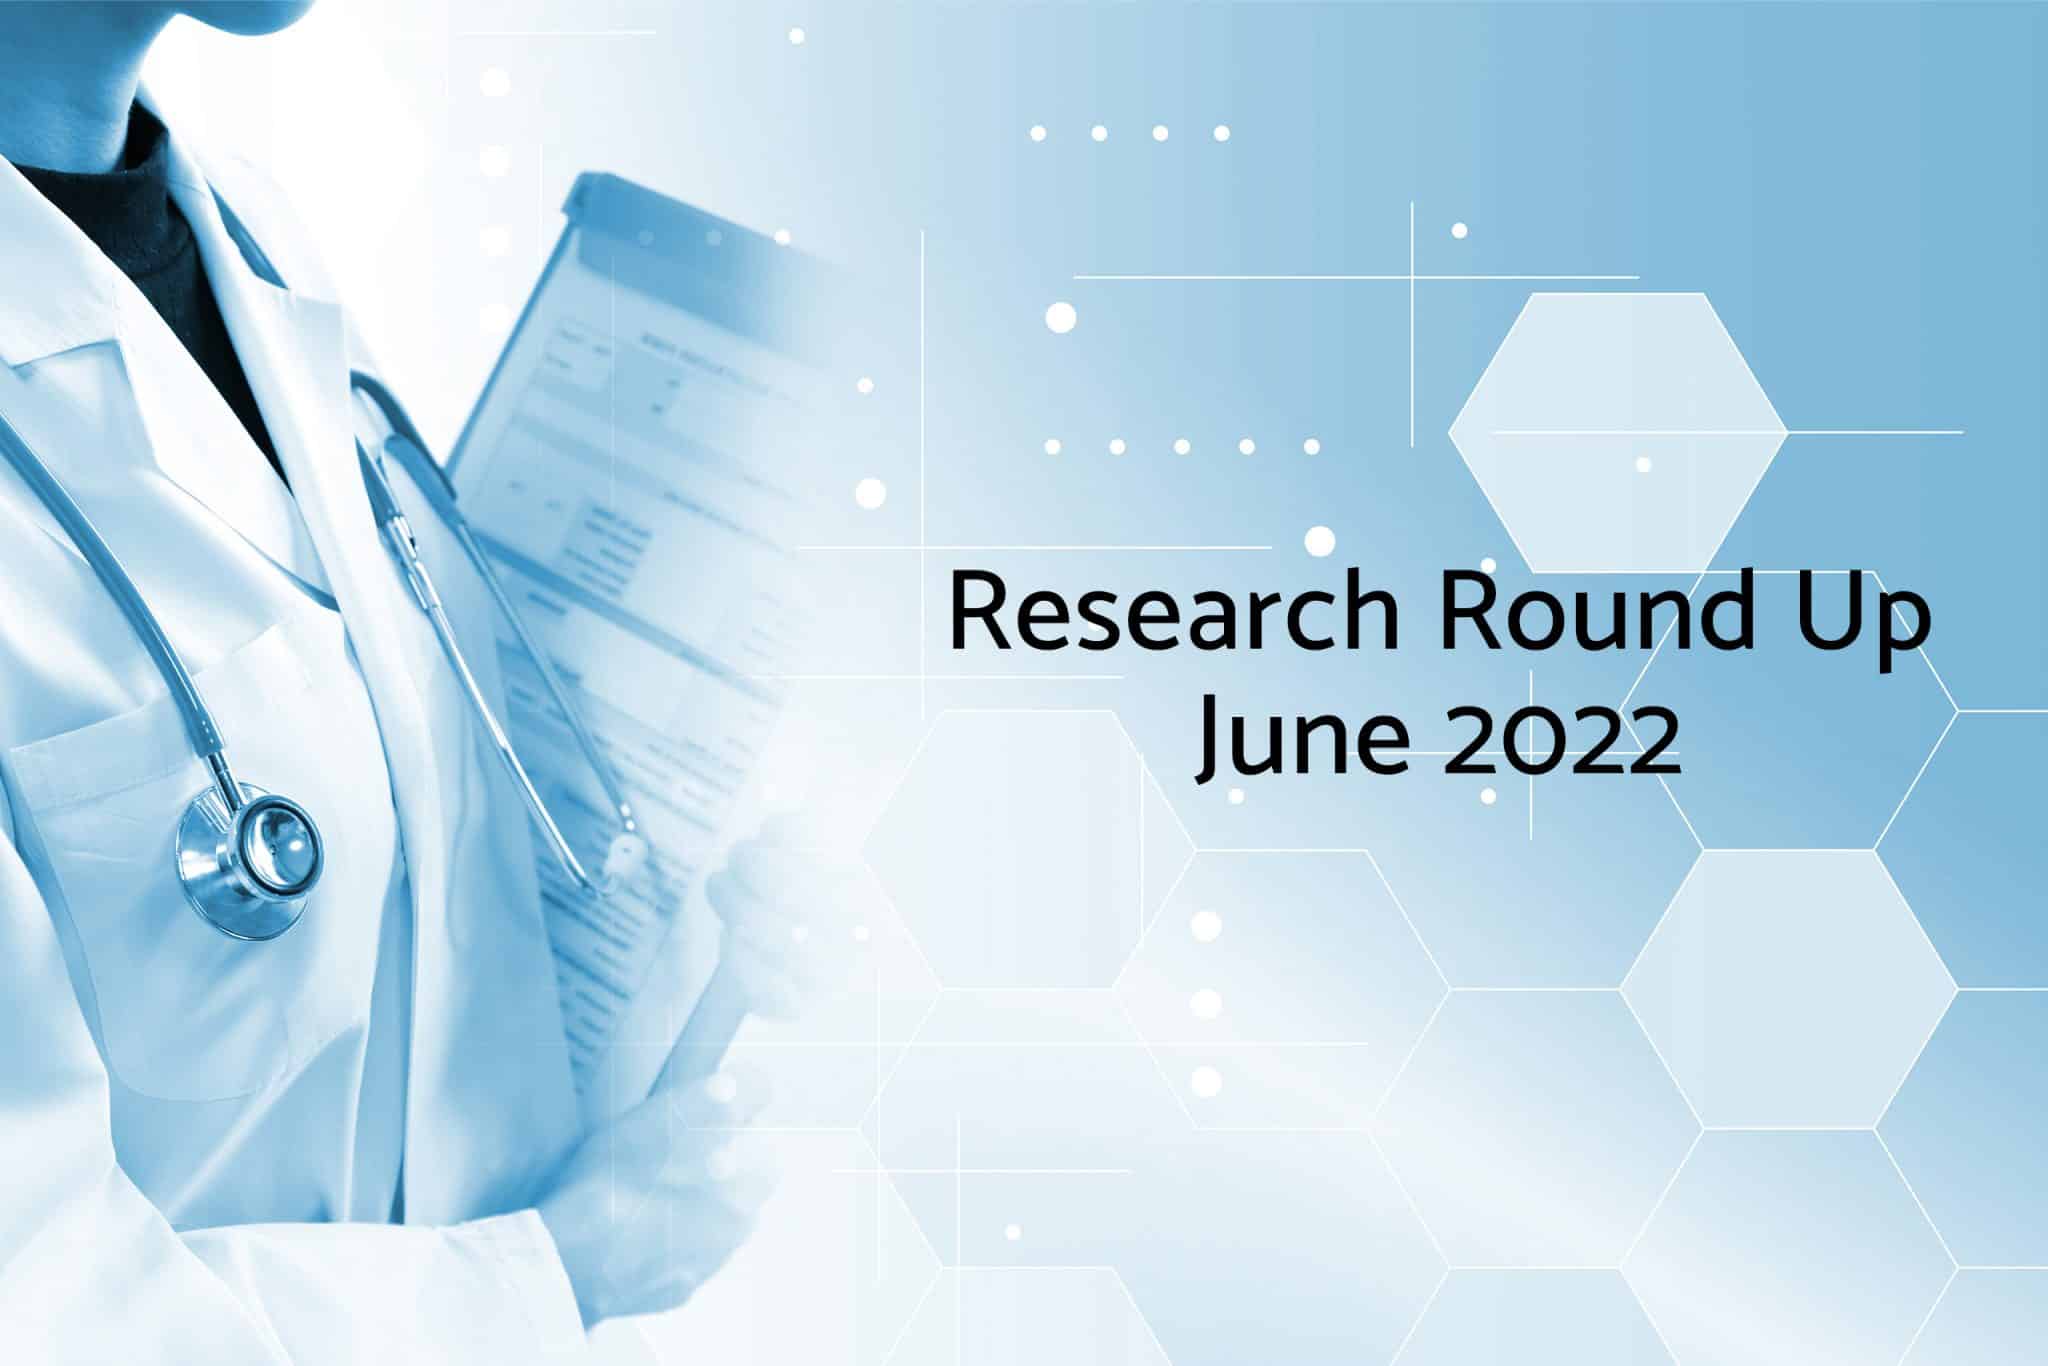 Research Round Up Header June 2022